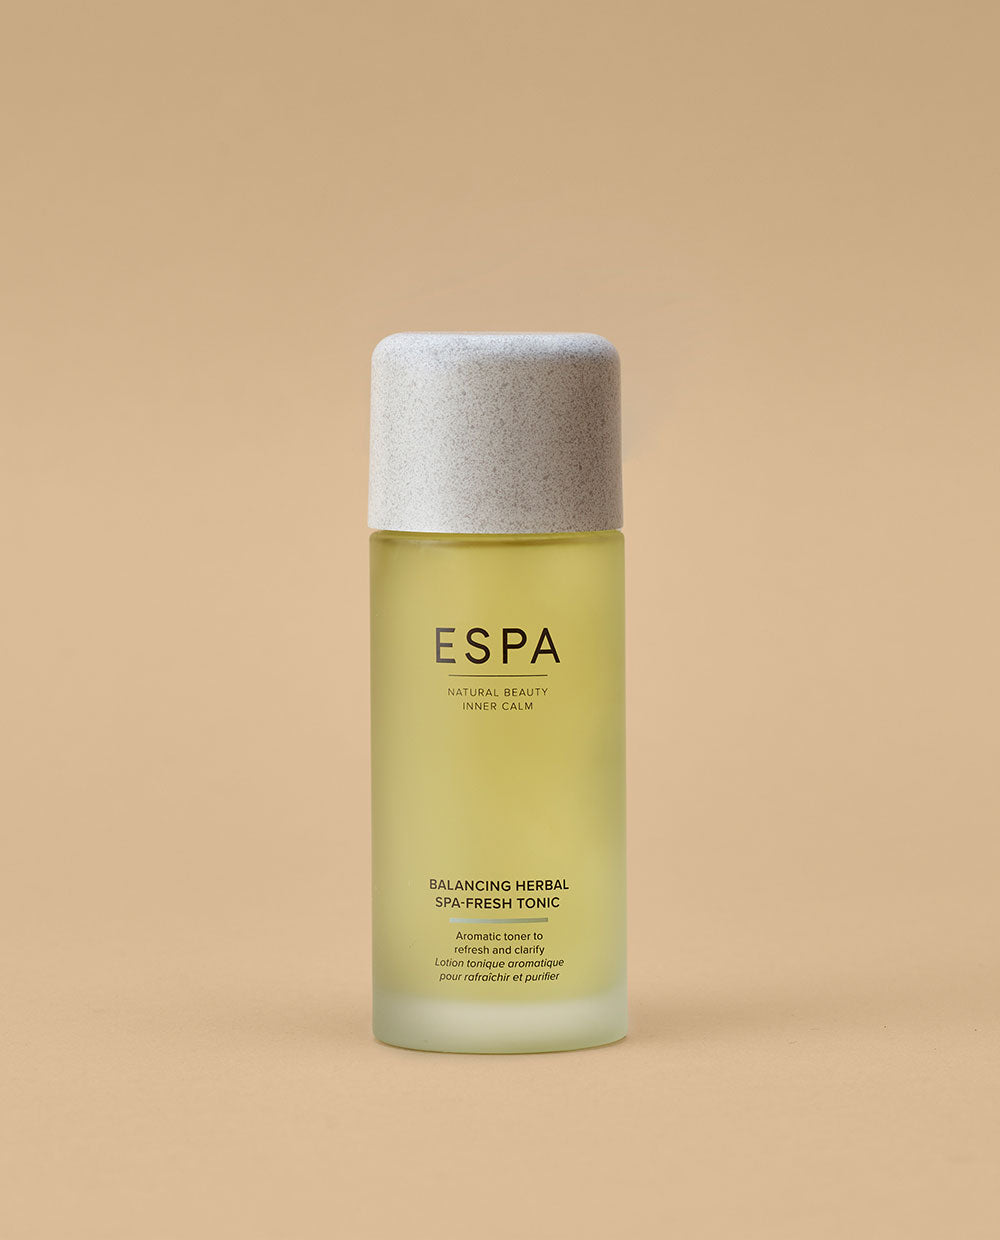 ESPA Balancing Herbal Spa-Fresh Tonic